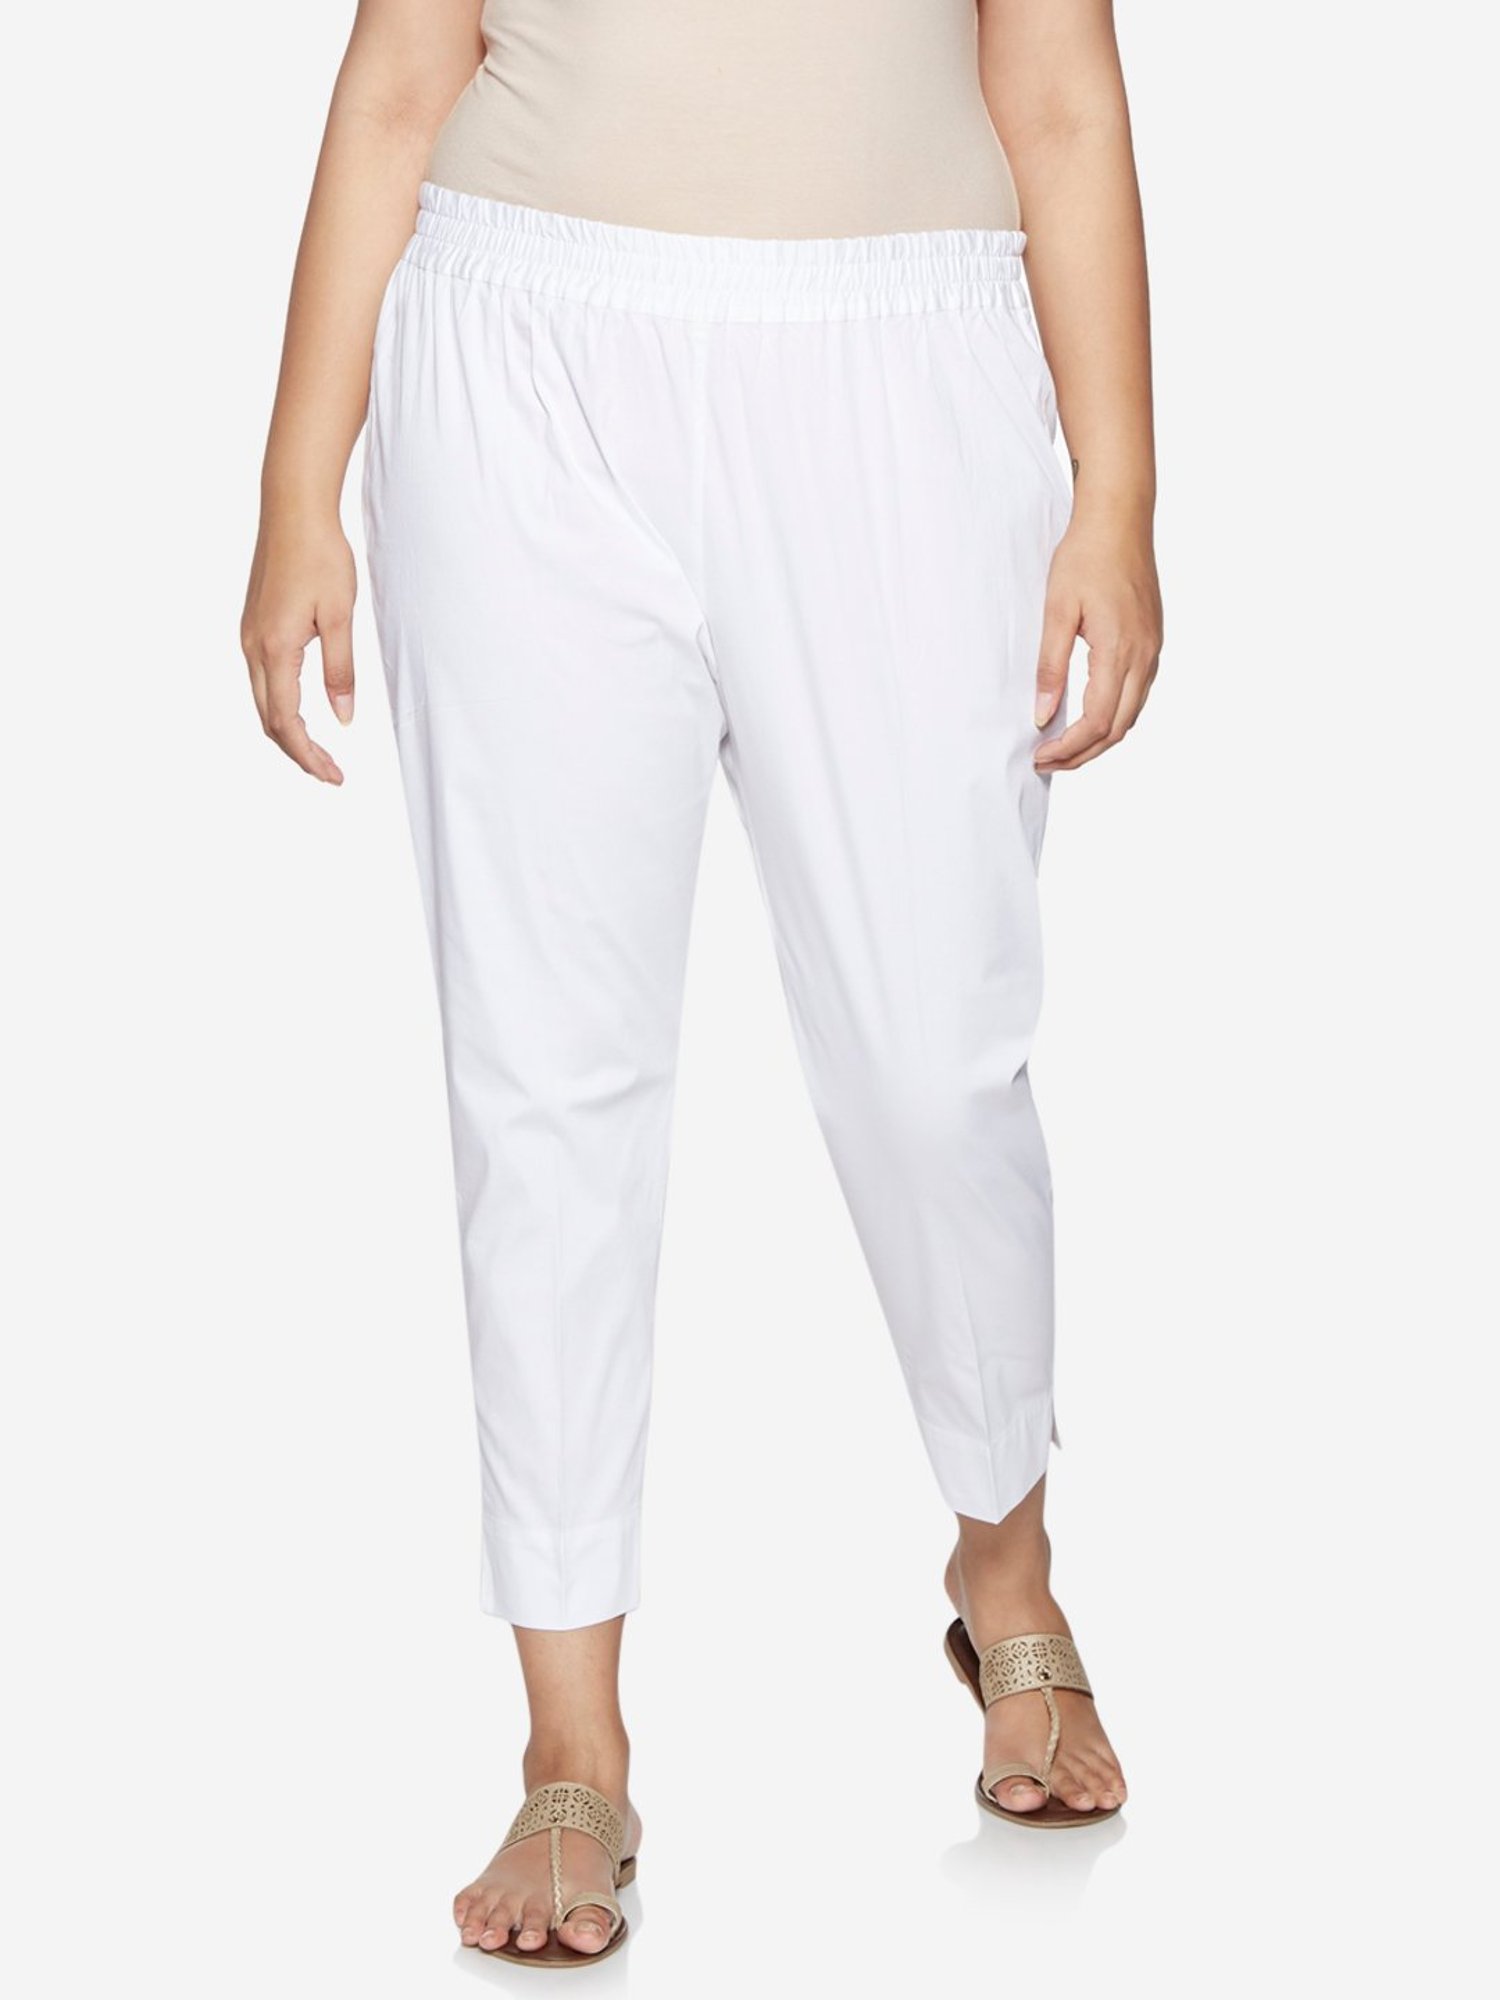 Navy  White Cotton Lycra Plus Size Stretchable Pant combo 2 pcs Trousers   Pants